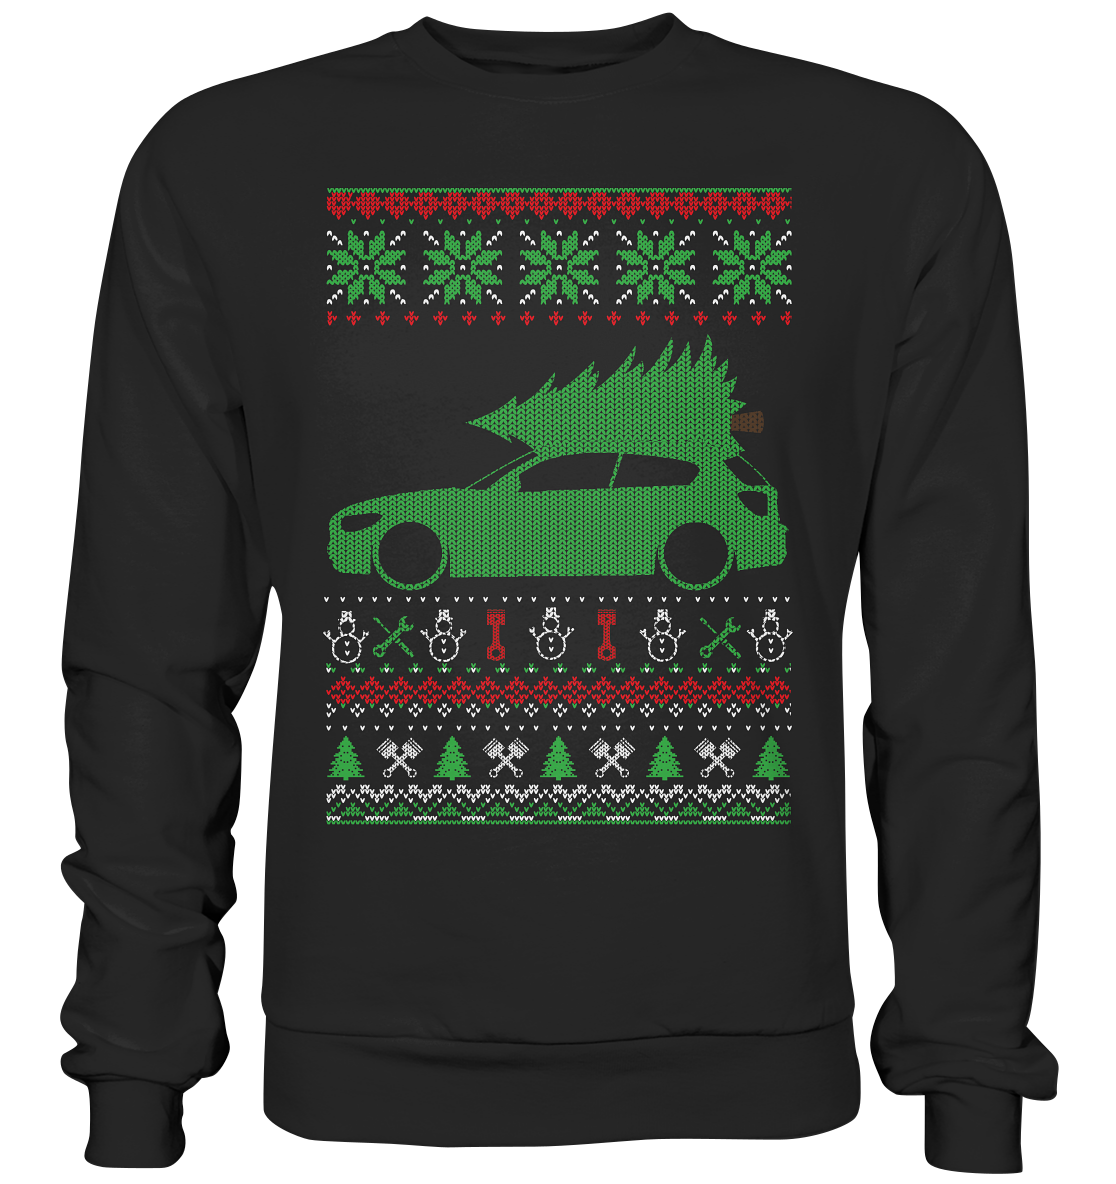 CODUGLY_BGKF21 - Premium Sweatshirt